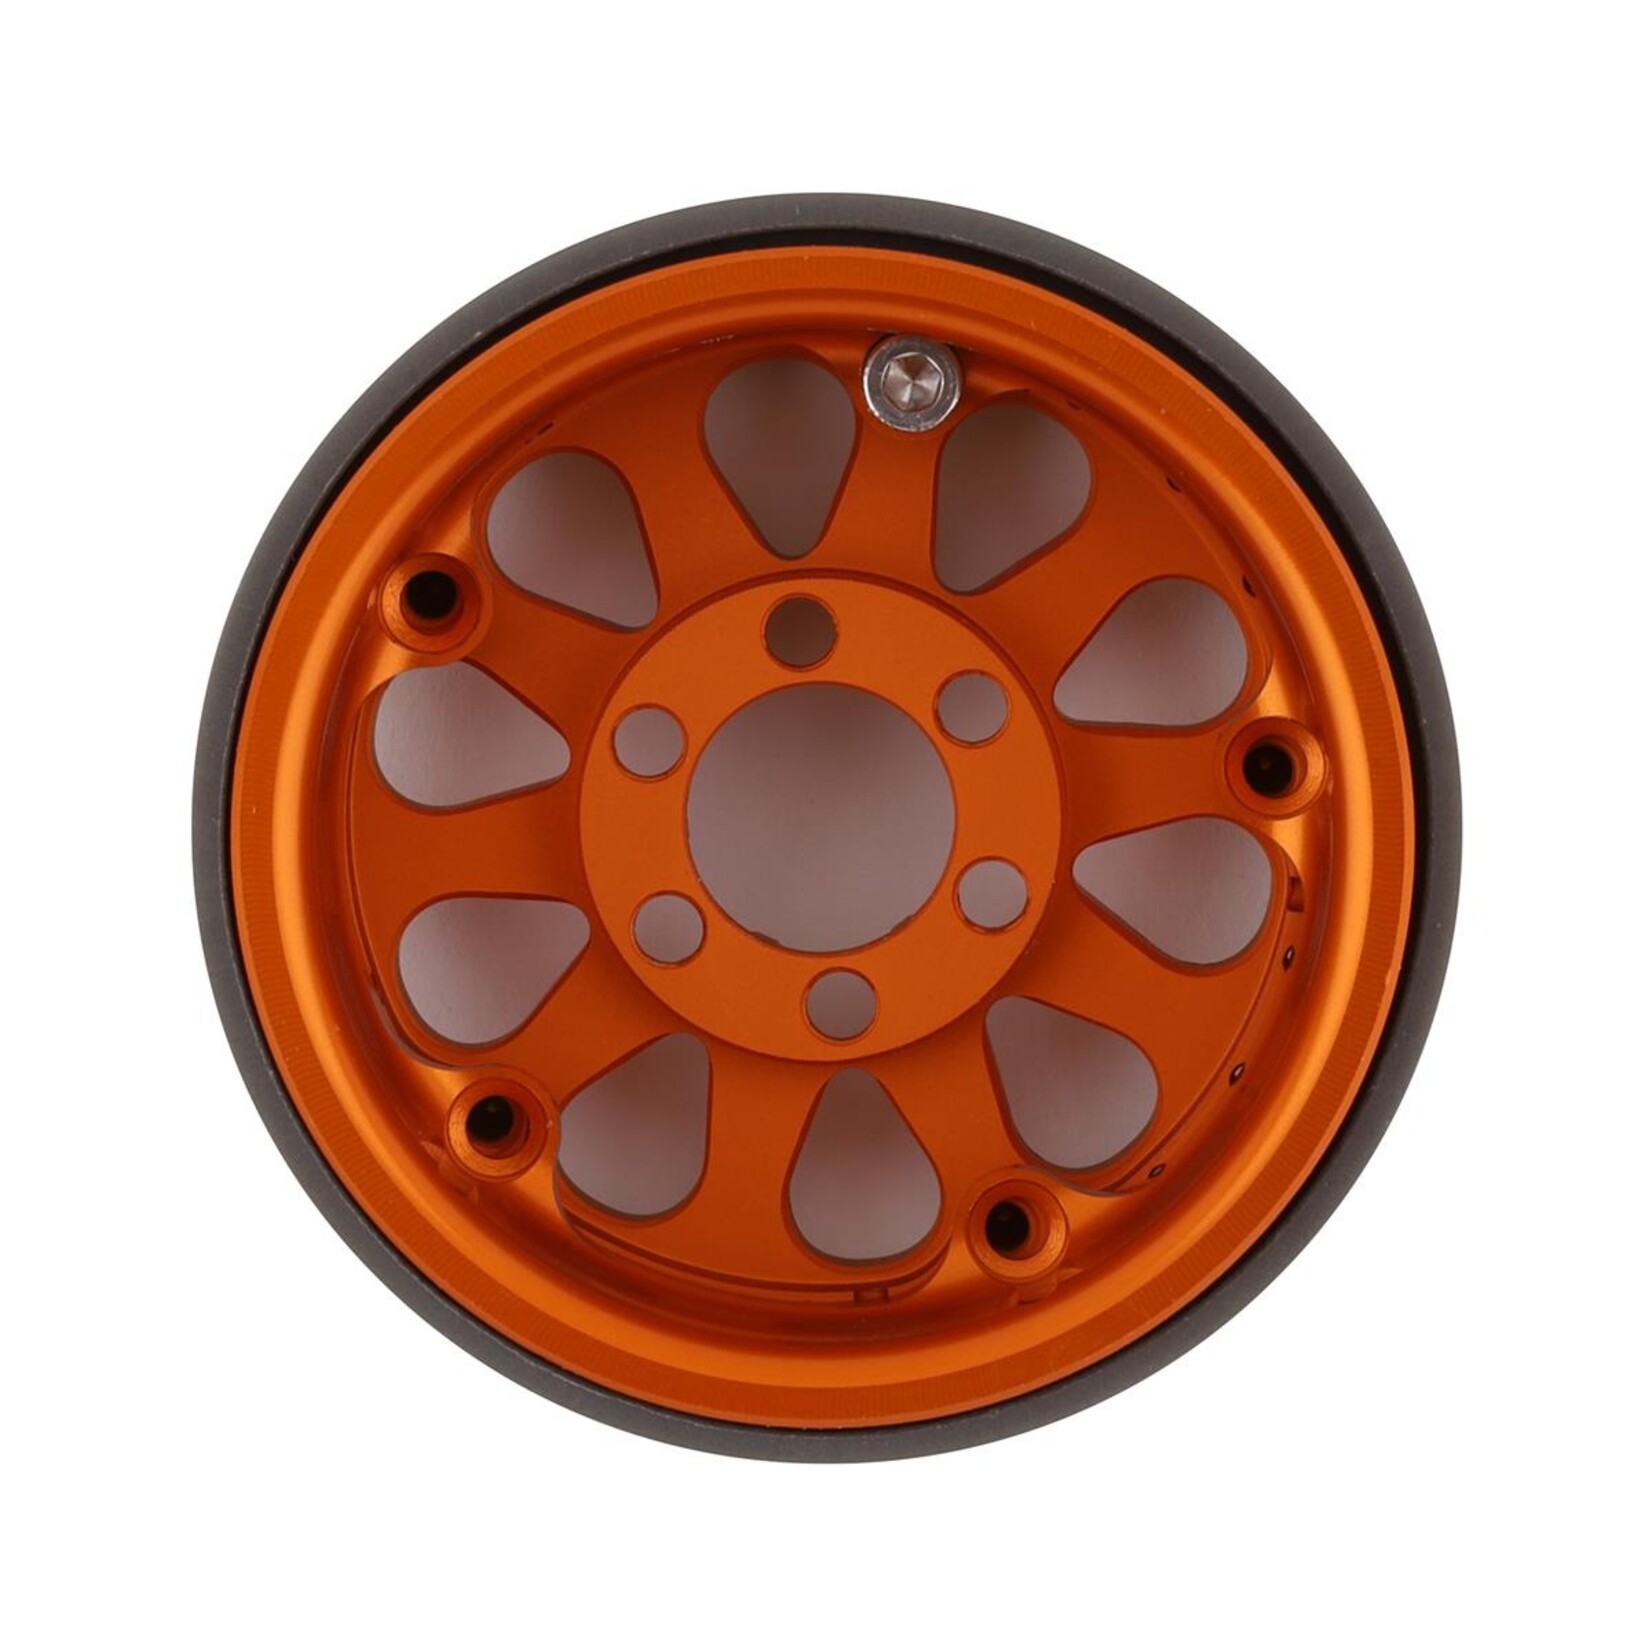 Vanquish Products Vanquish Products Method 101 V2 1.9" Beadlock Crawler Wheels (Orange/Black) (2) #VPS07761